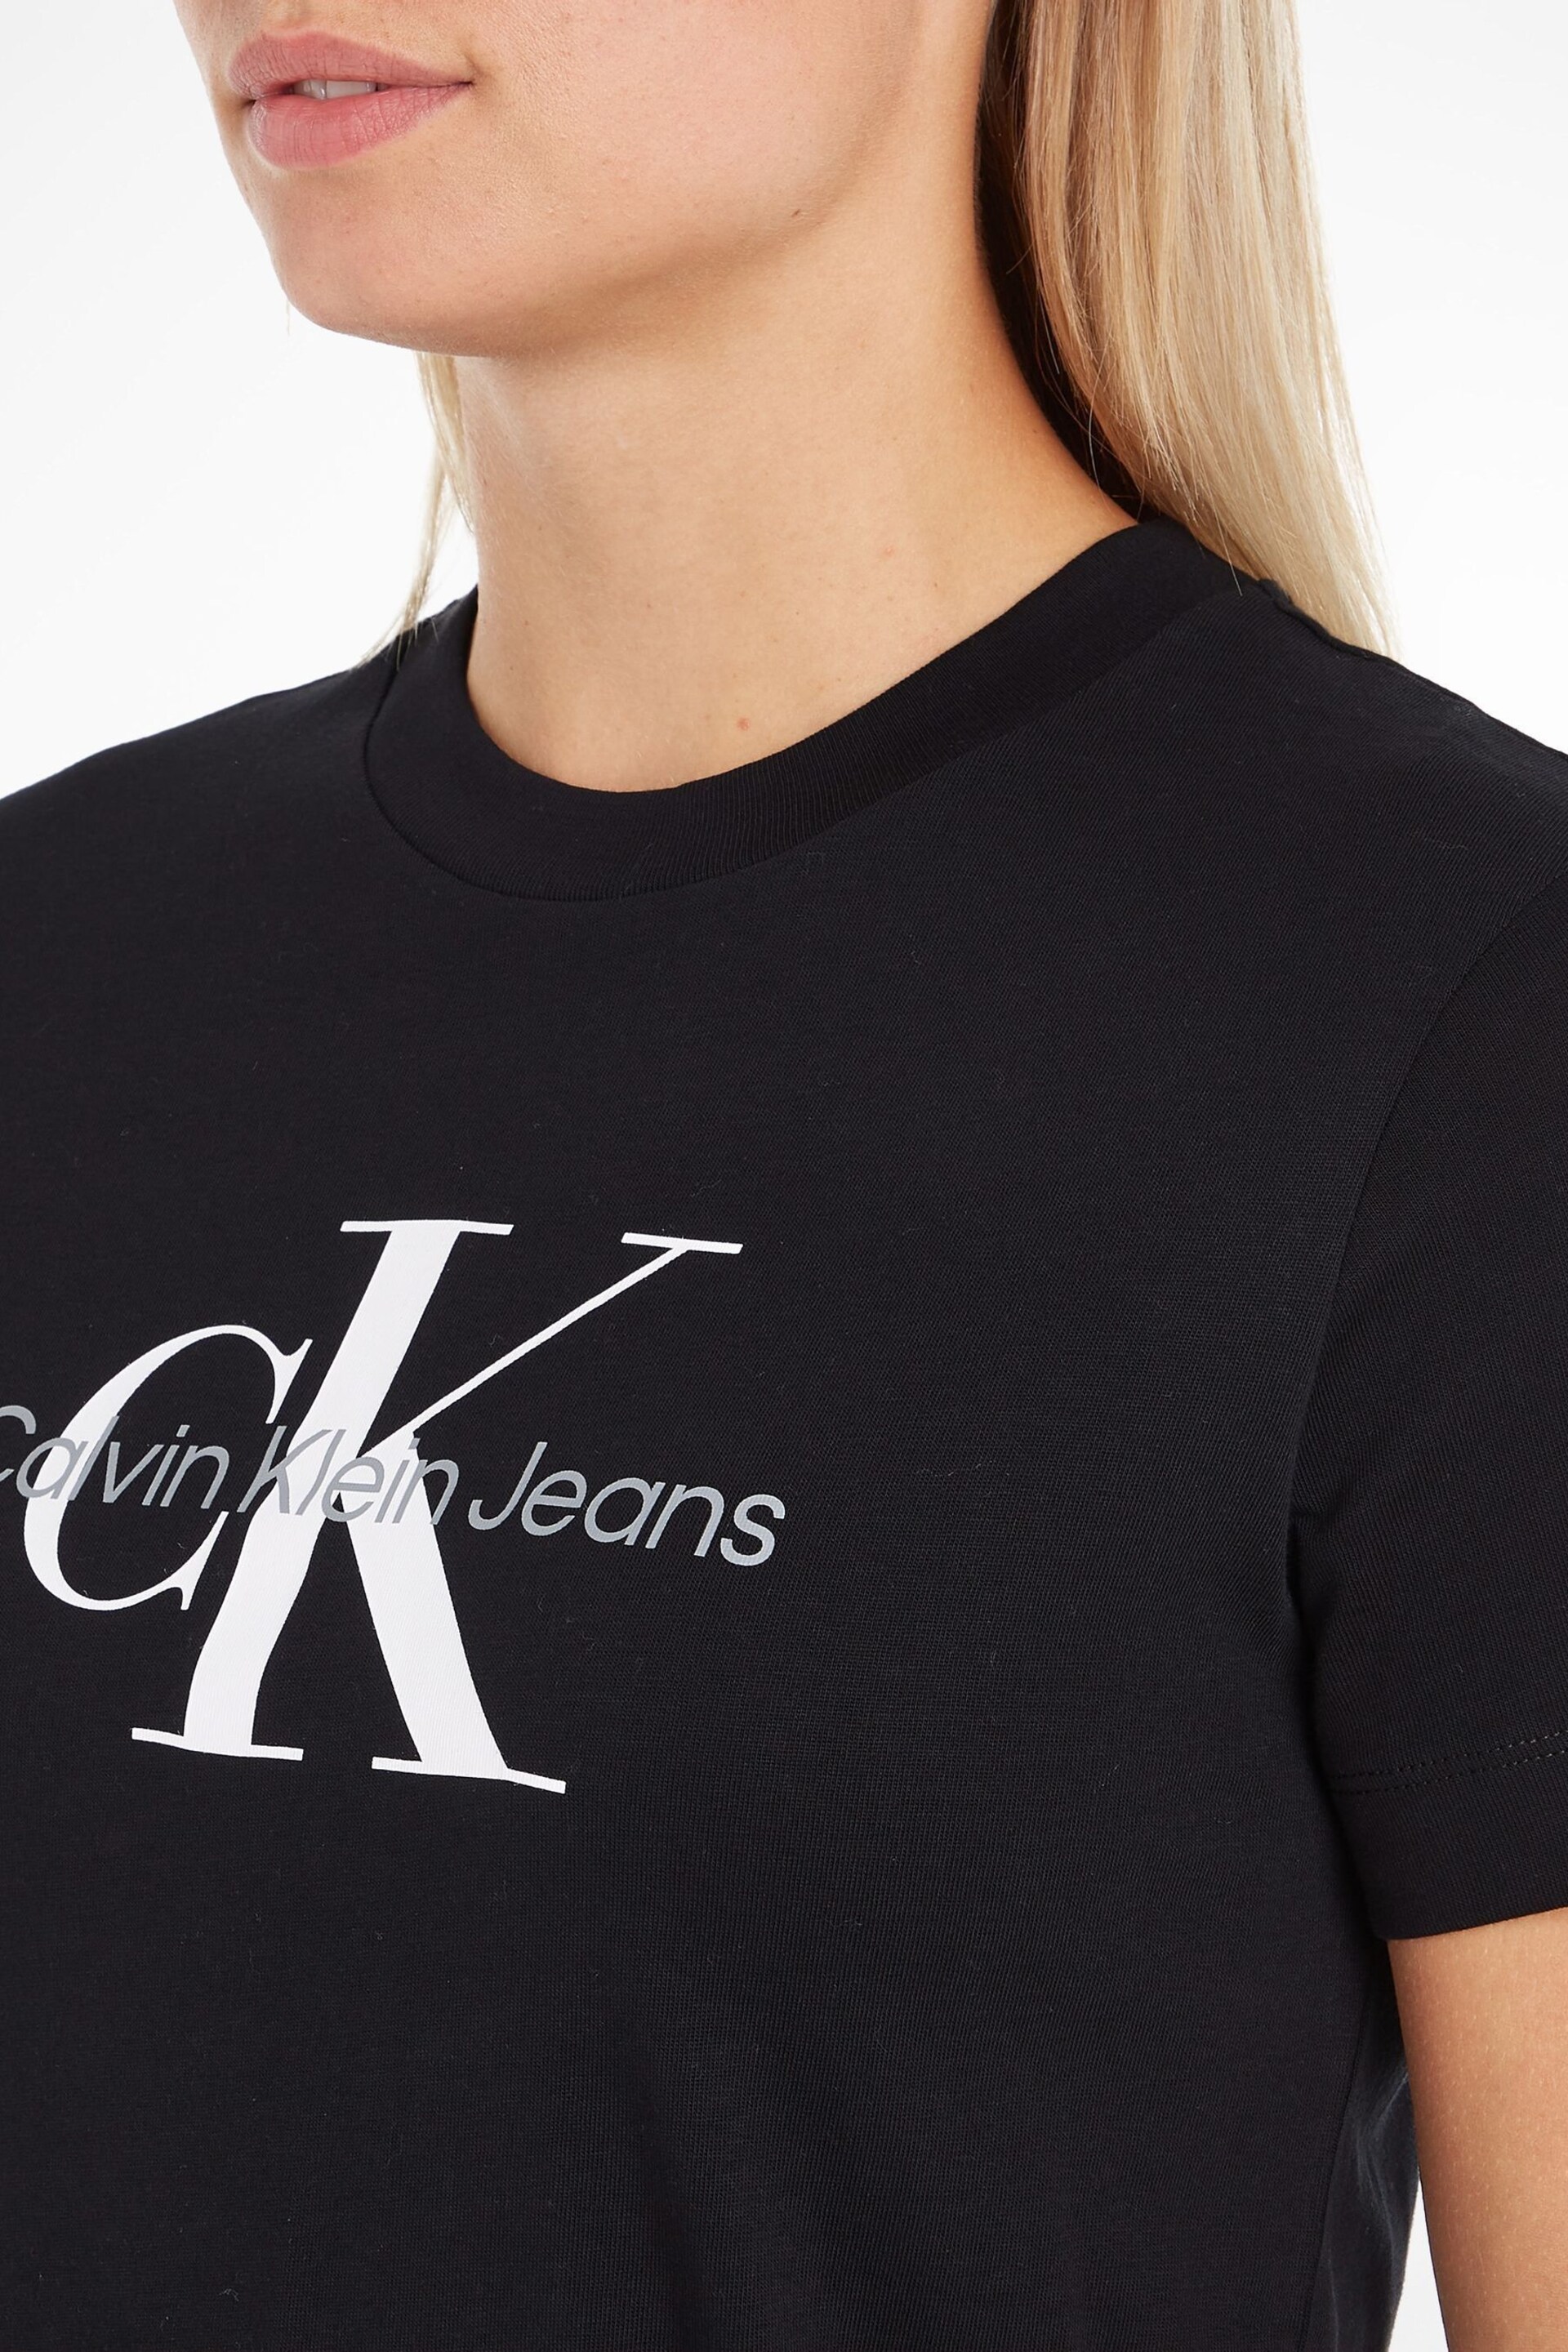 Calvin Klein Jeans Black Core Monogram Regular T-Shirt - Image 3 of 5